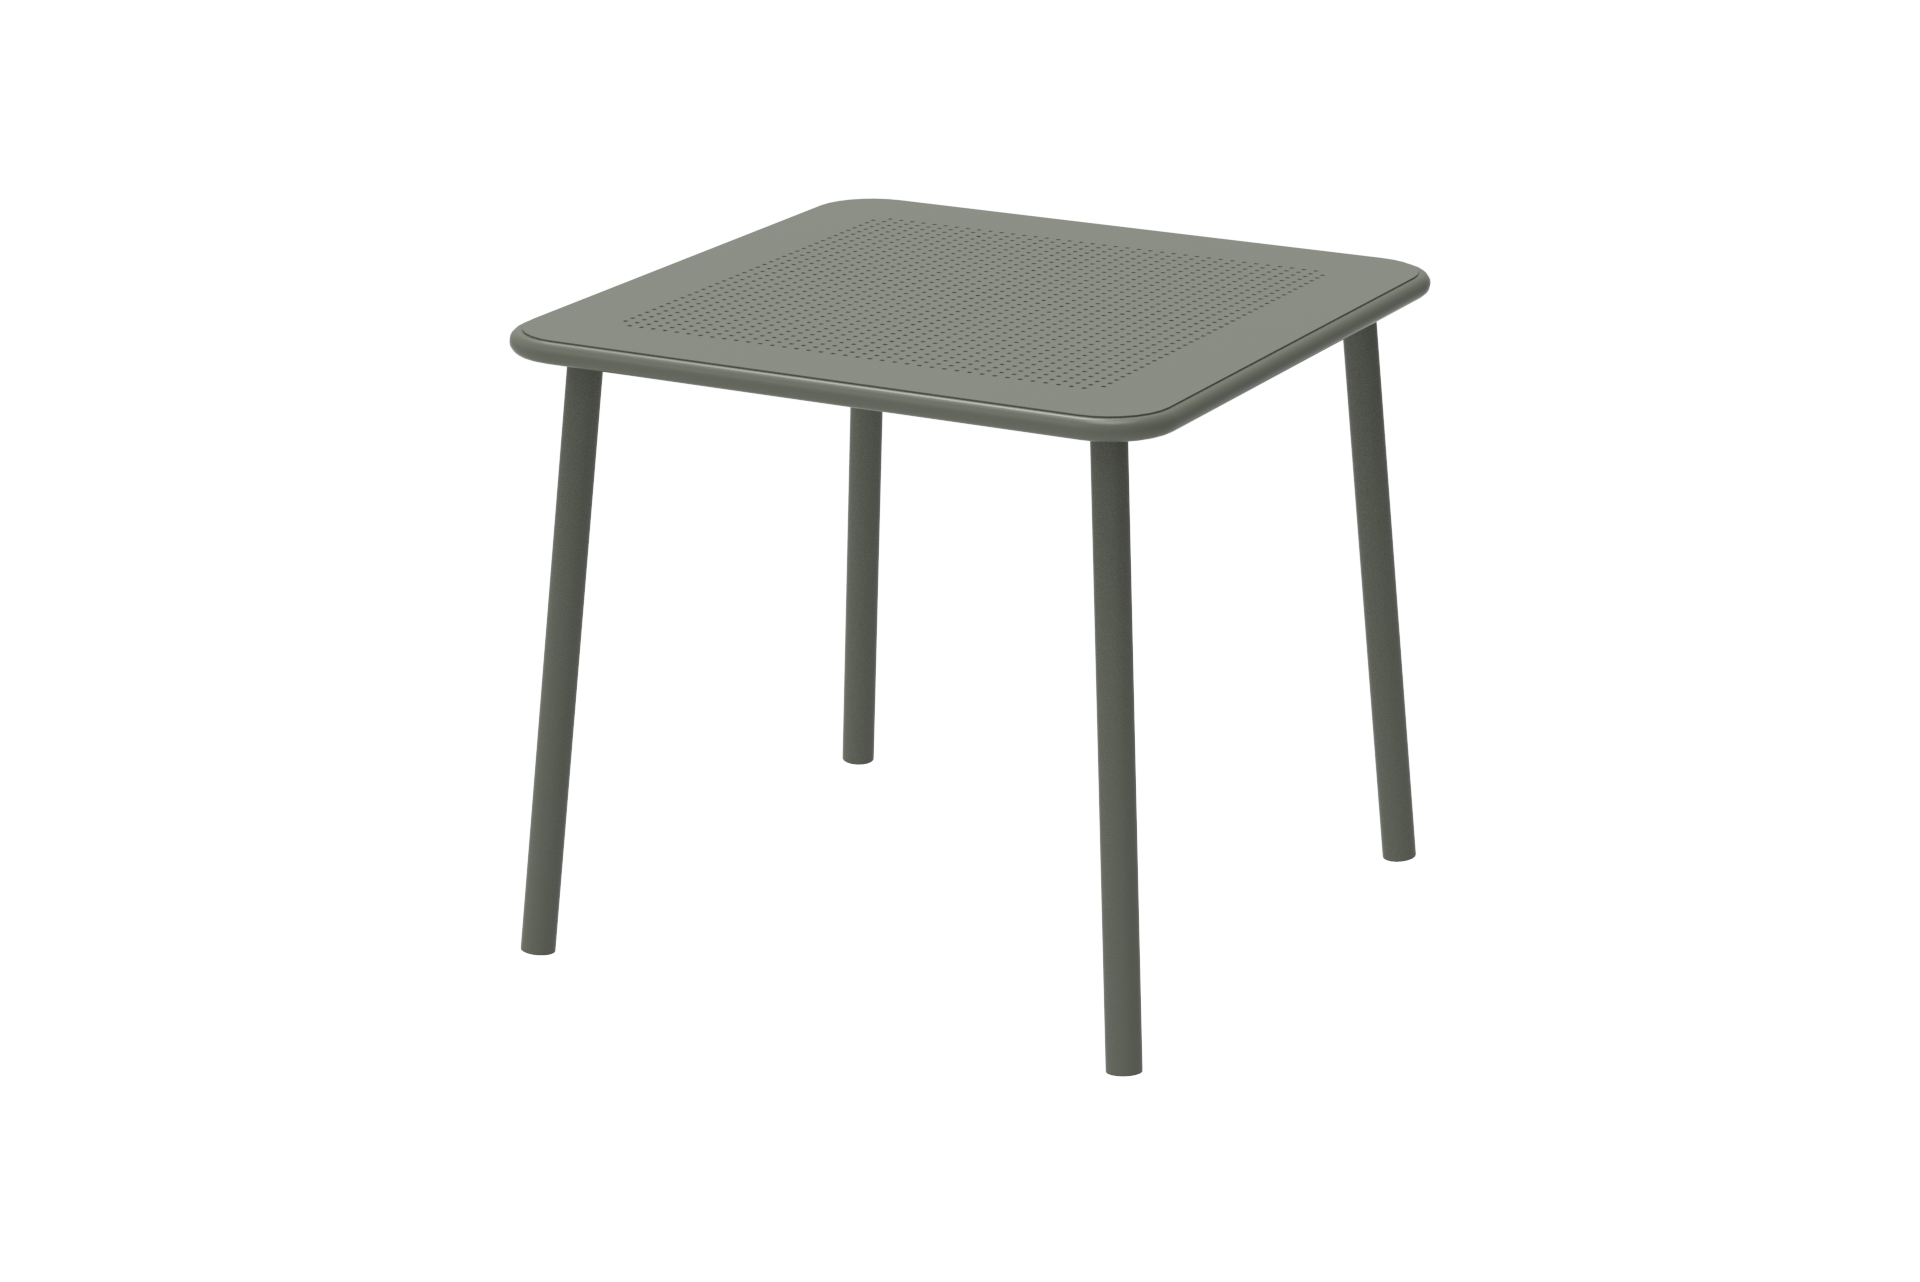 Verona Square Table 0.8m x 0.8m